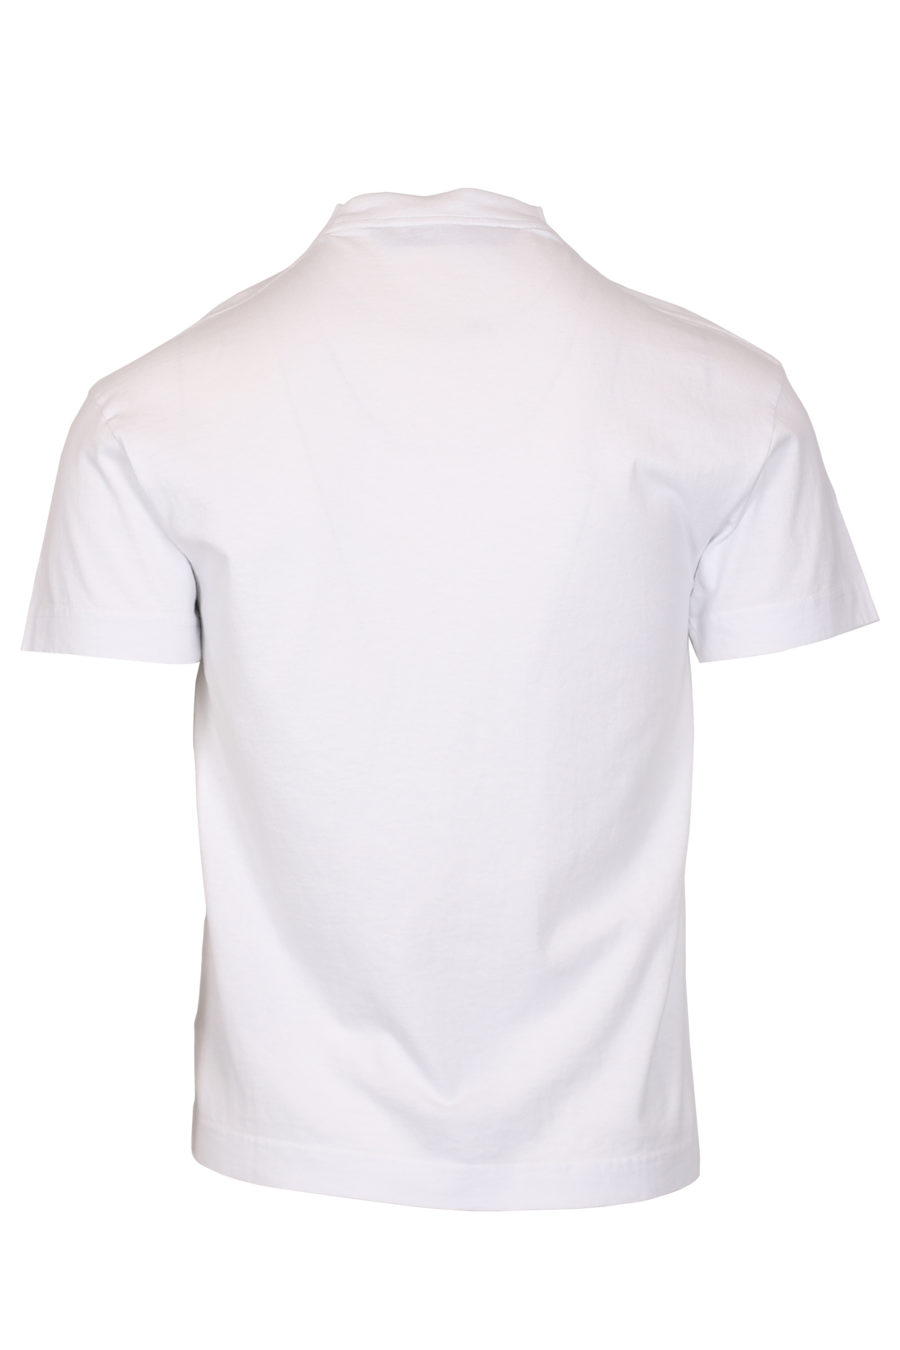 Camiseta blanca logotipo St. Moritz - IMG 1051